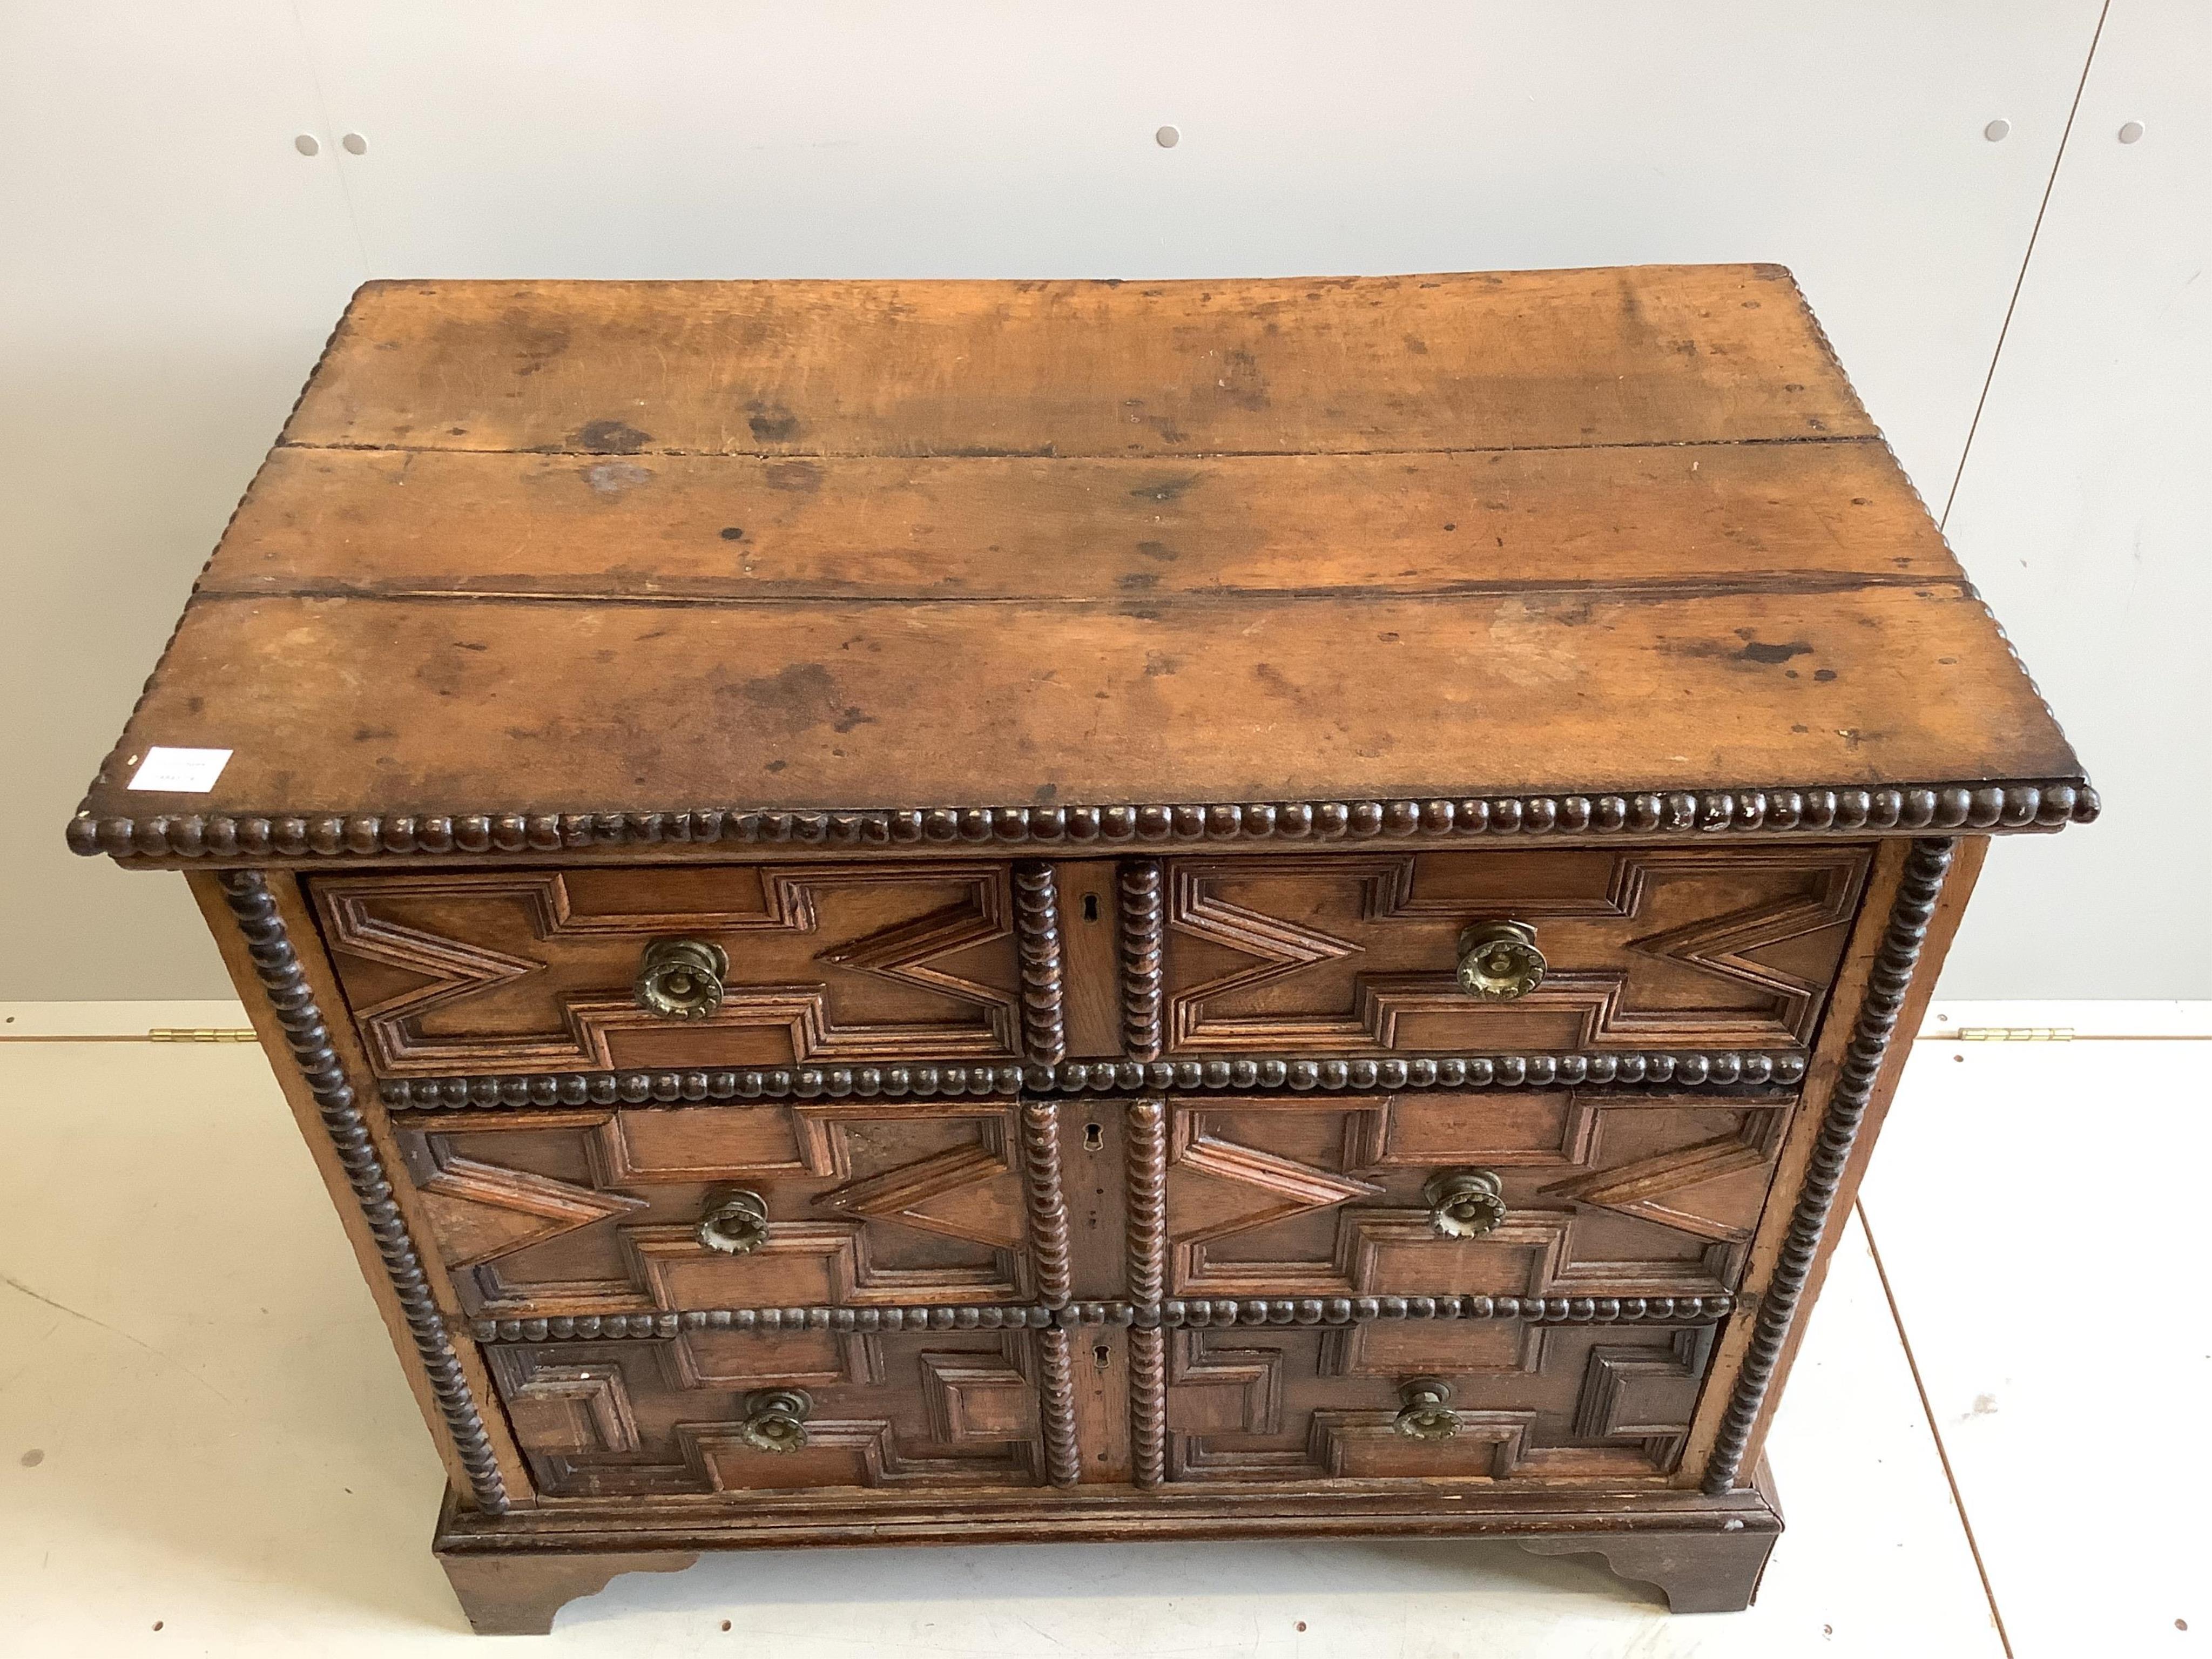 A 17th / 18th century oak chest, width 98cm, depth 56cm, height 84cm. Condition - fair